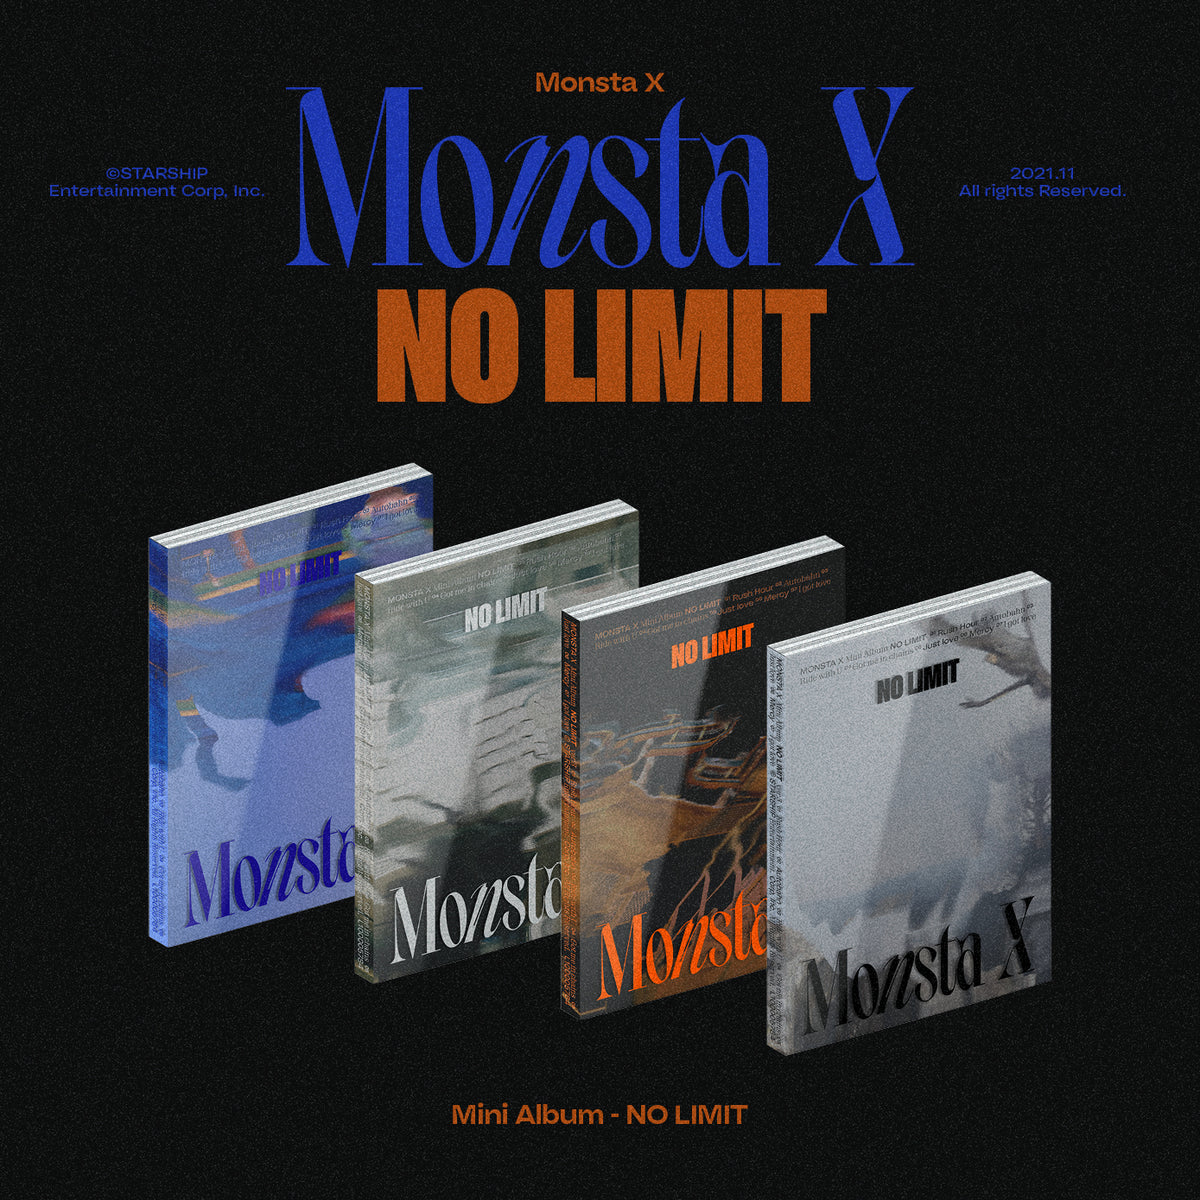 MONSTA X 10TH MINI ALBUM - NO LIMIT
– SubK Shop
